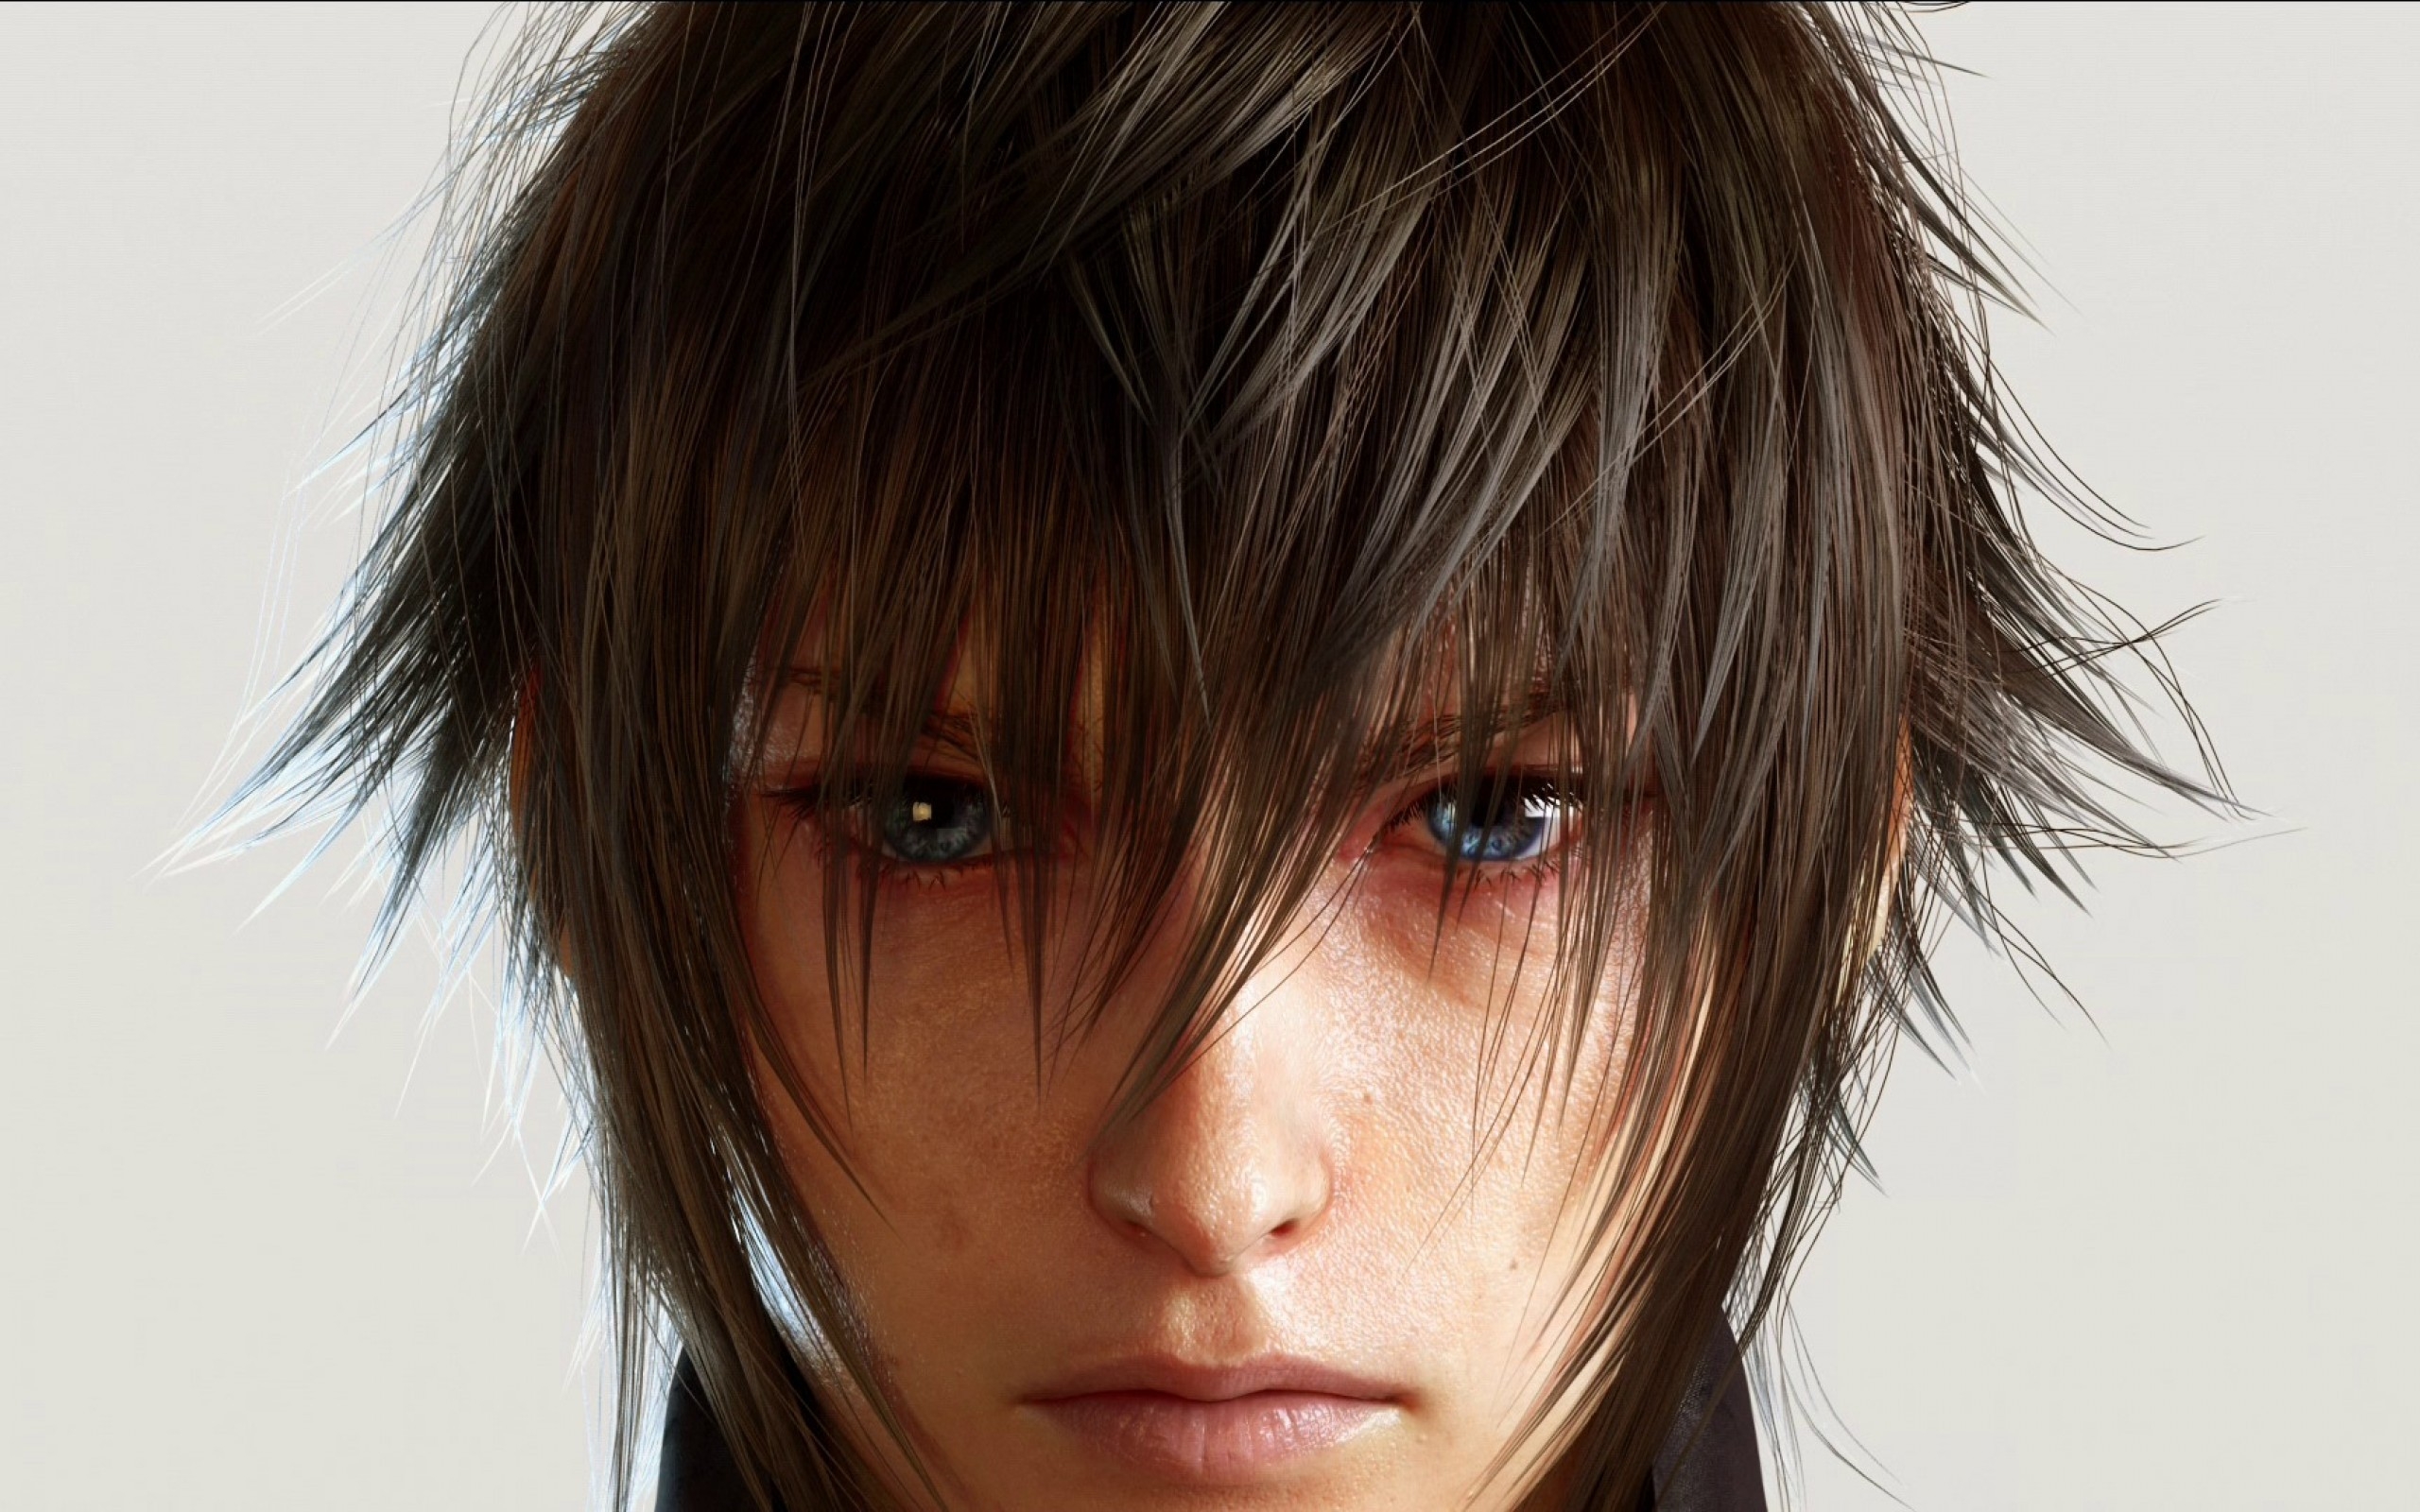 Final Fantasy XV Close Details for 2560 x 1600 widescreen resolution